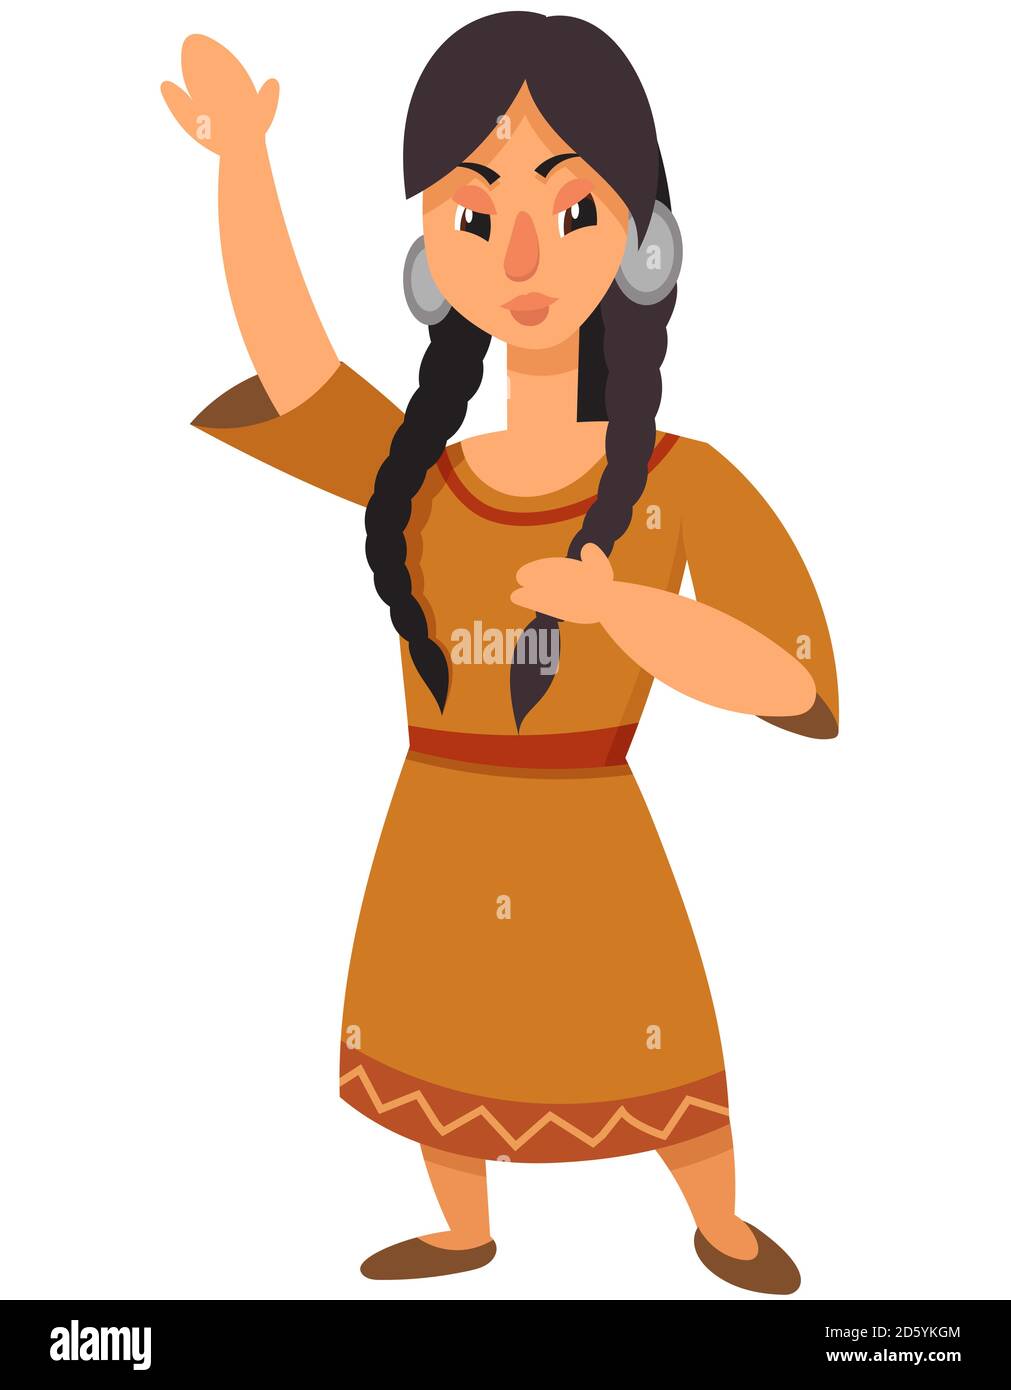 Dancing native american girl. Female character in cartoon style Stock ...